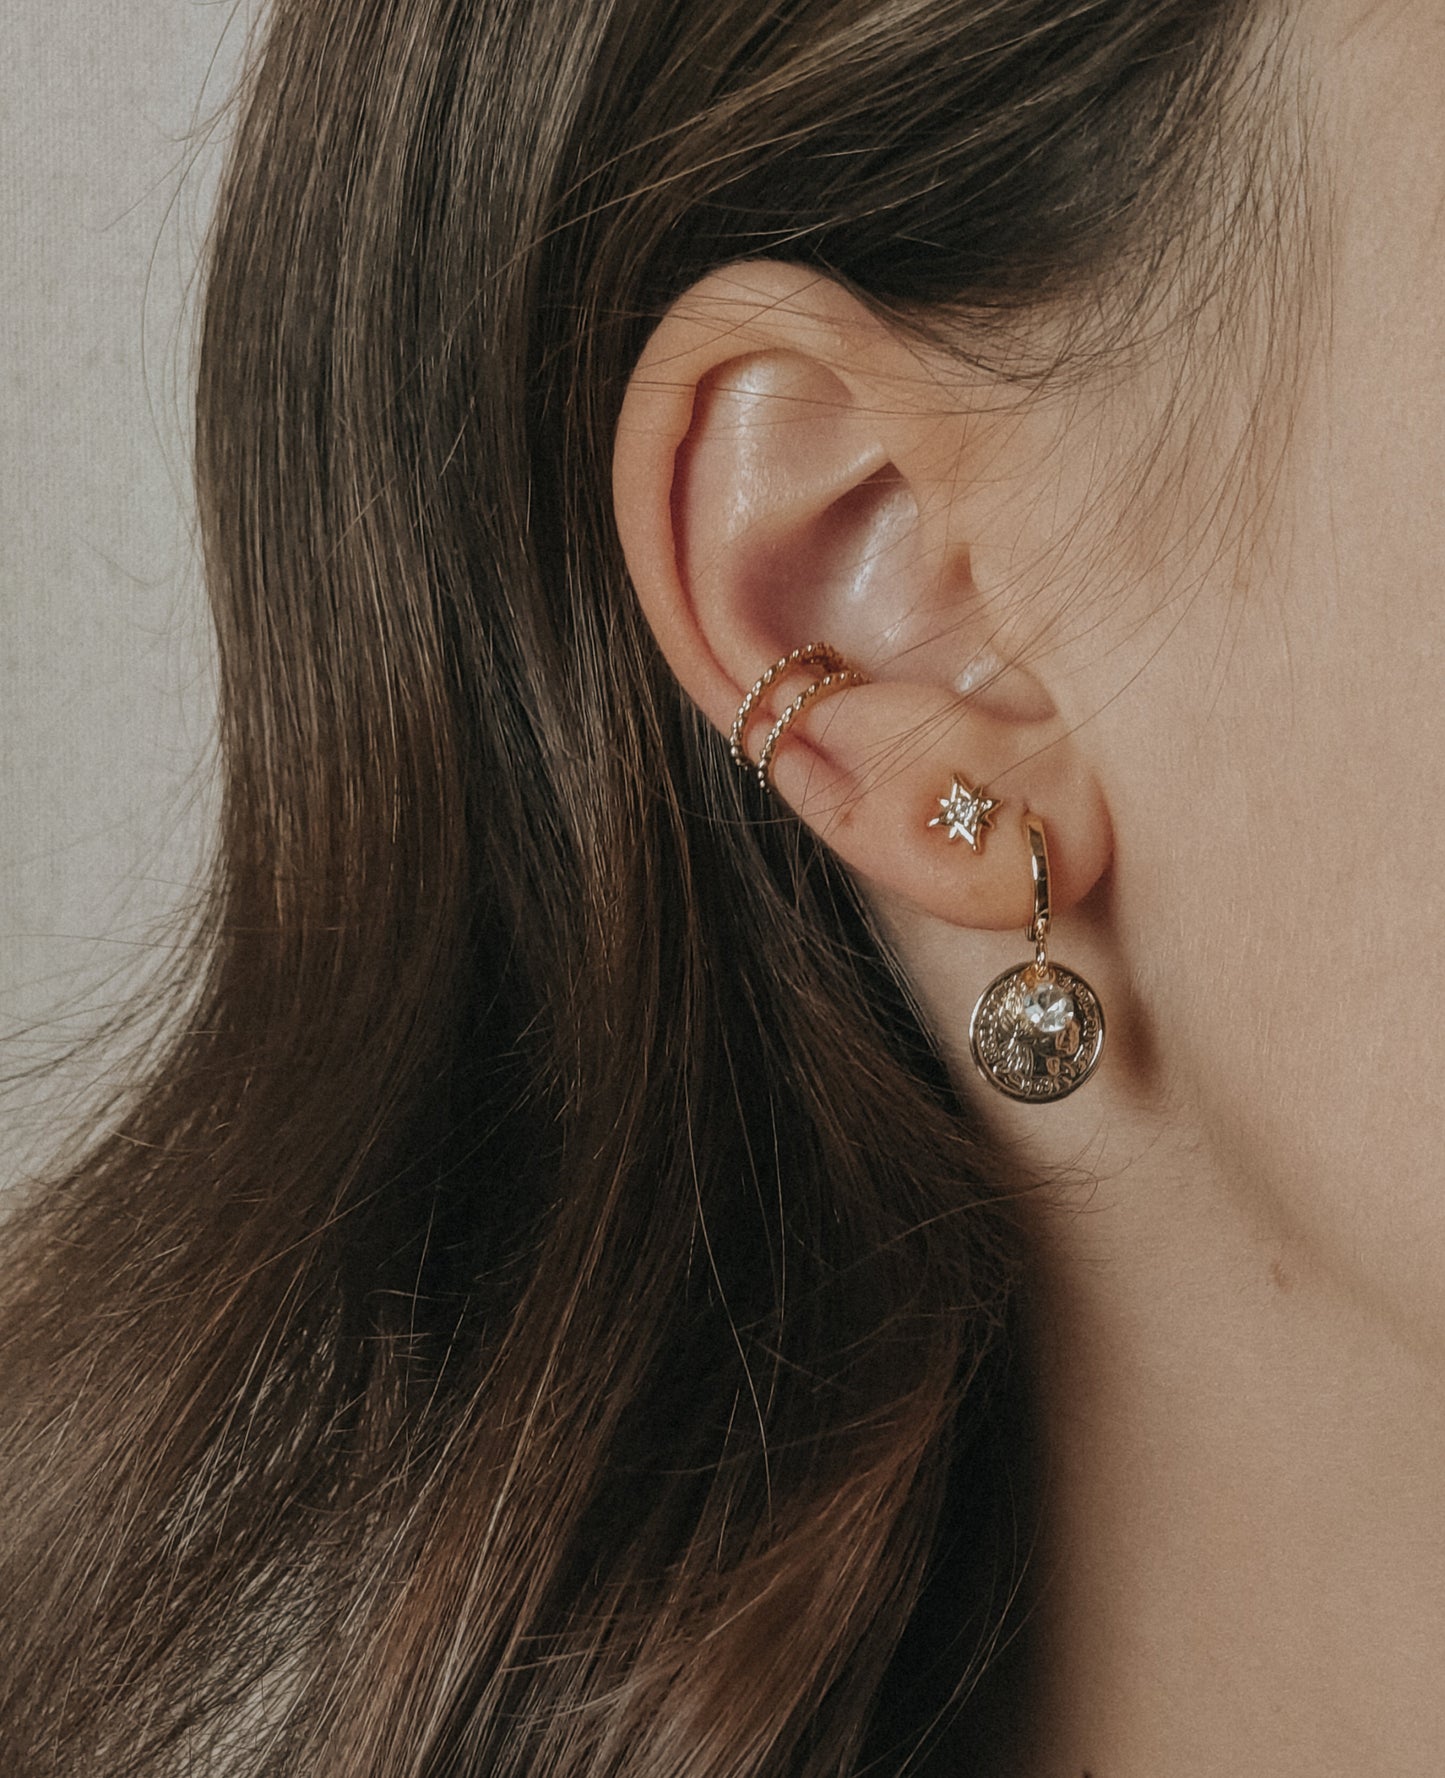 “Tia” stud earrings